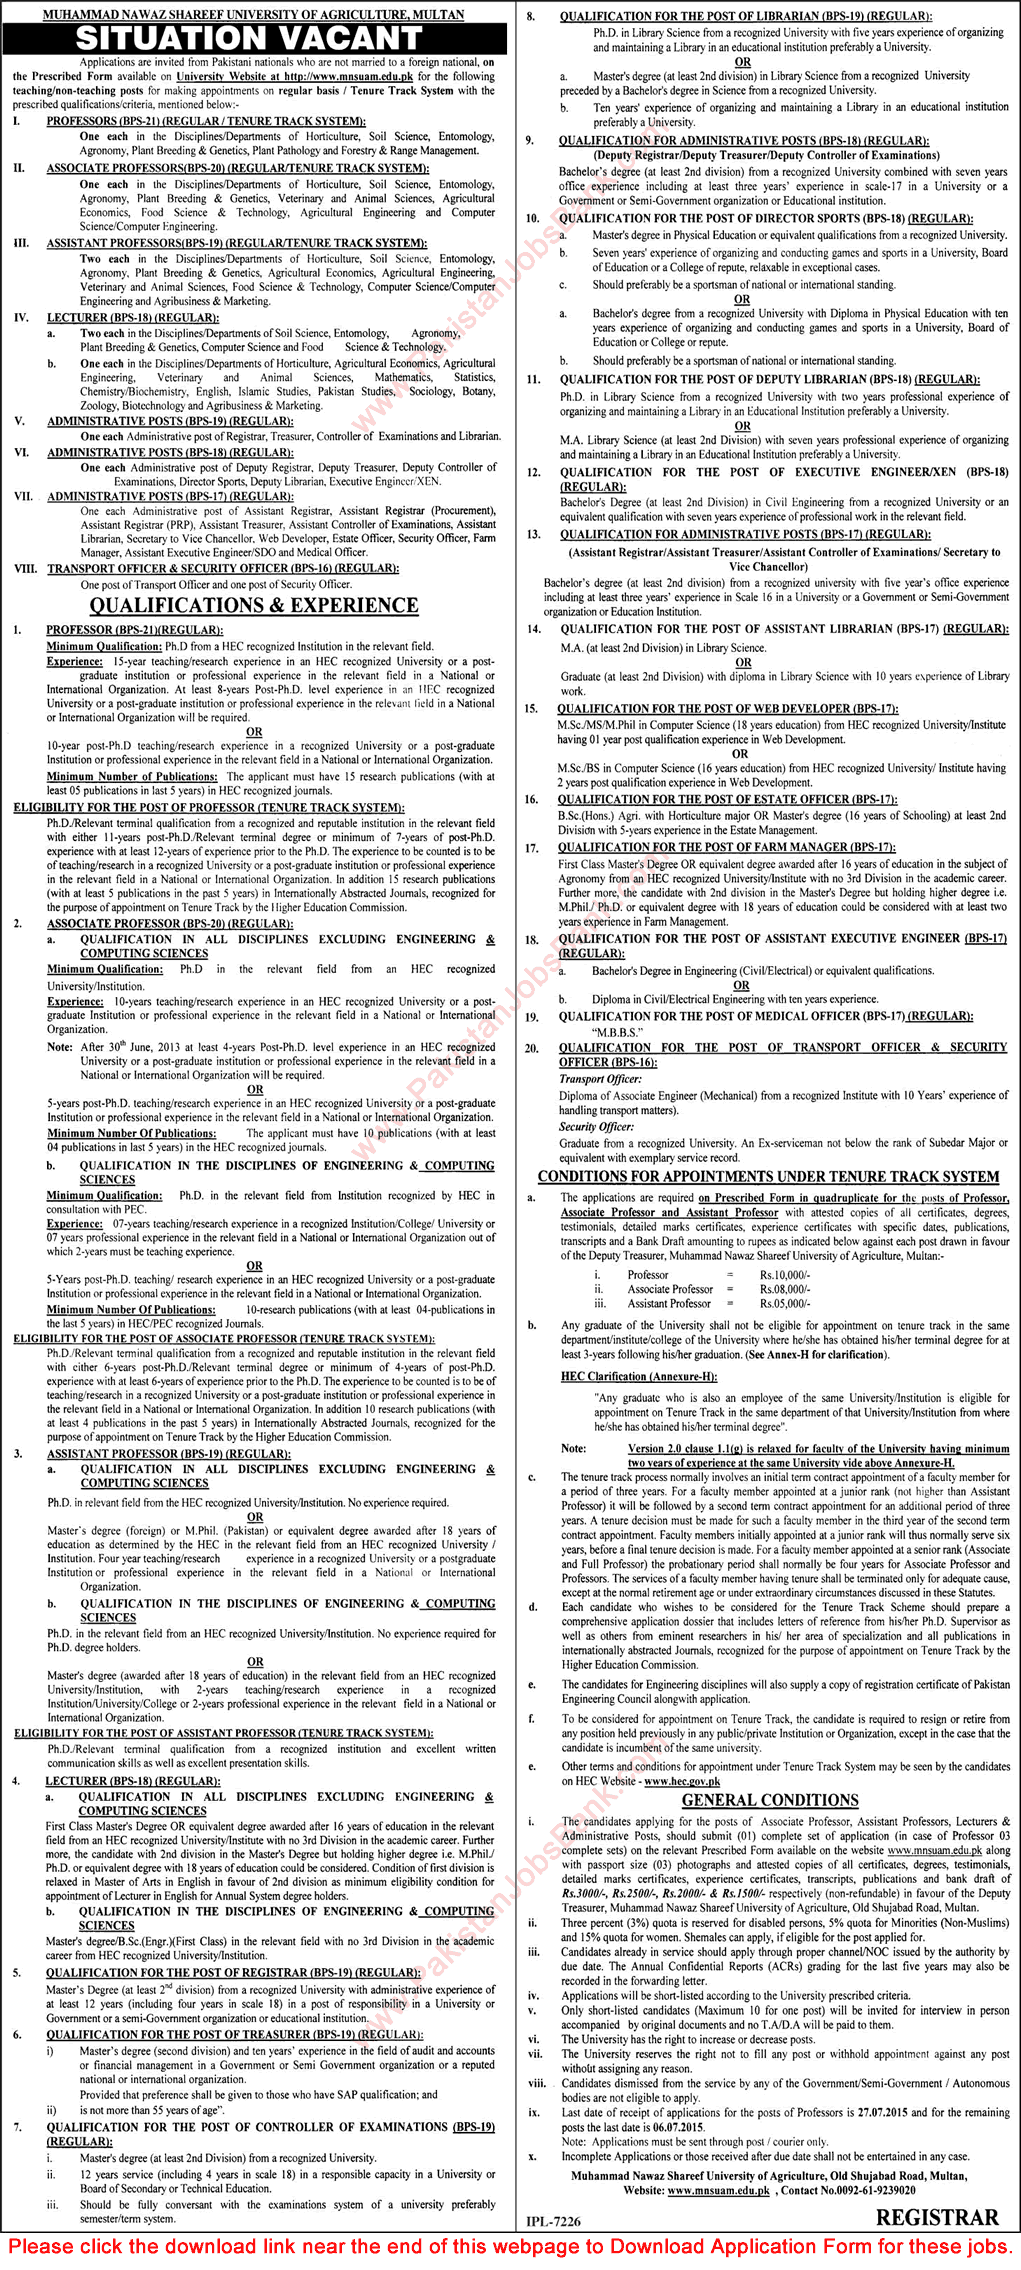 Jobs in Muhammad Nawaz Shareef University of Agriculture Multan 2015 May / June Application Form